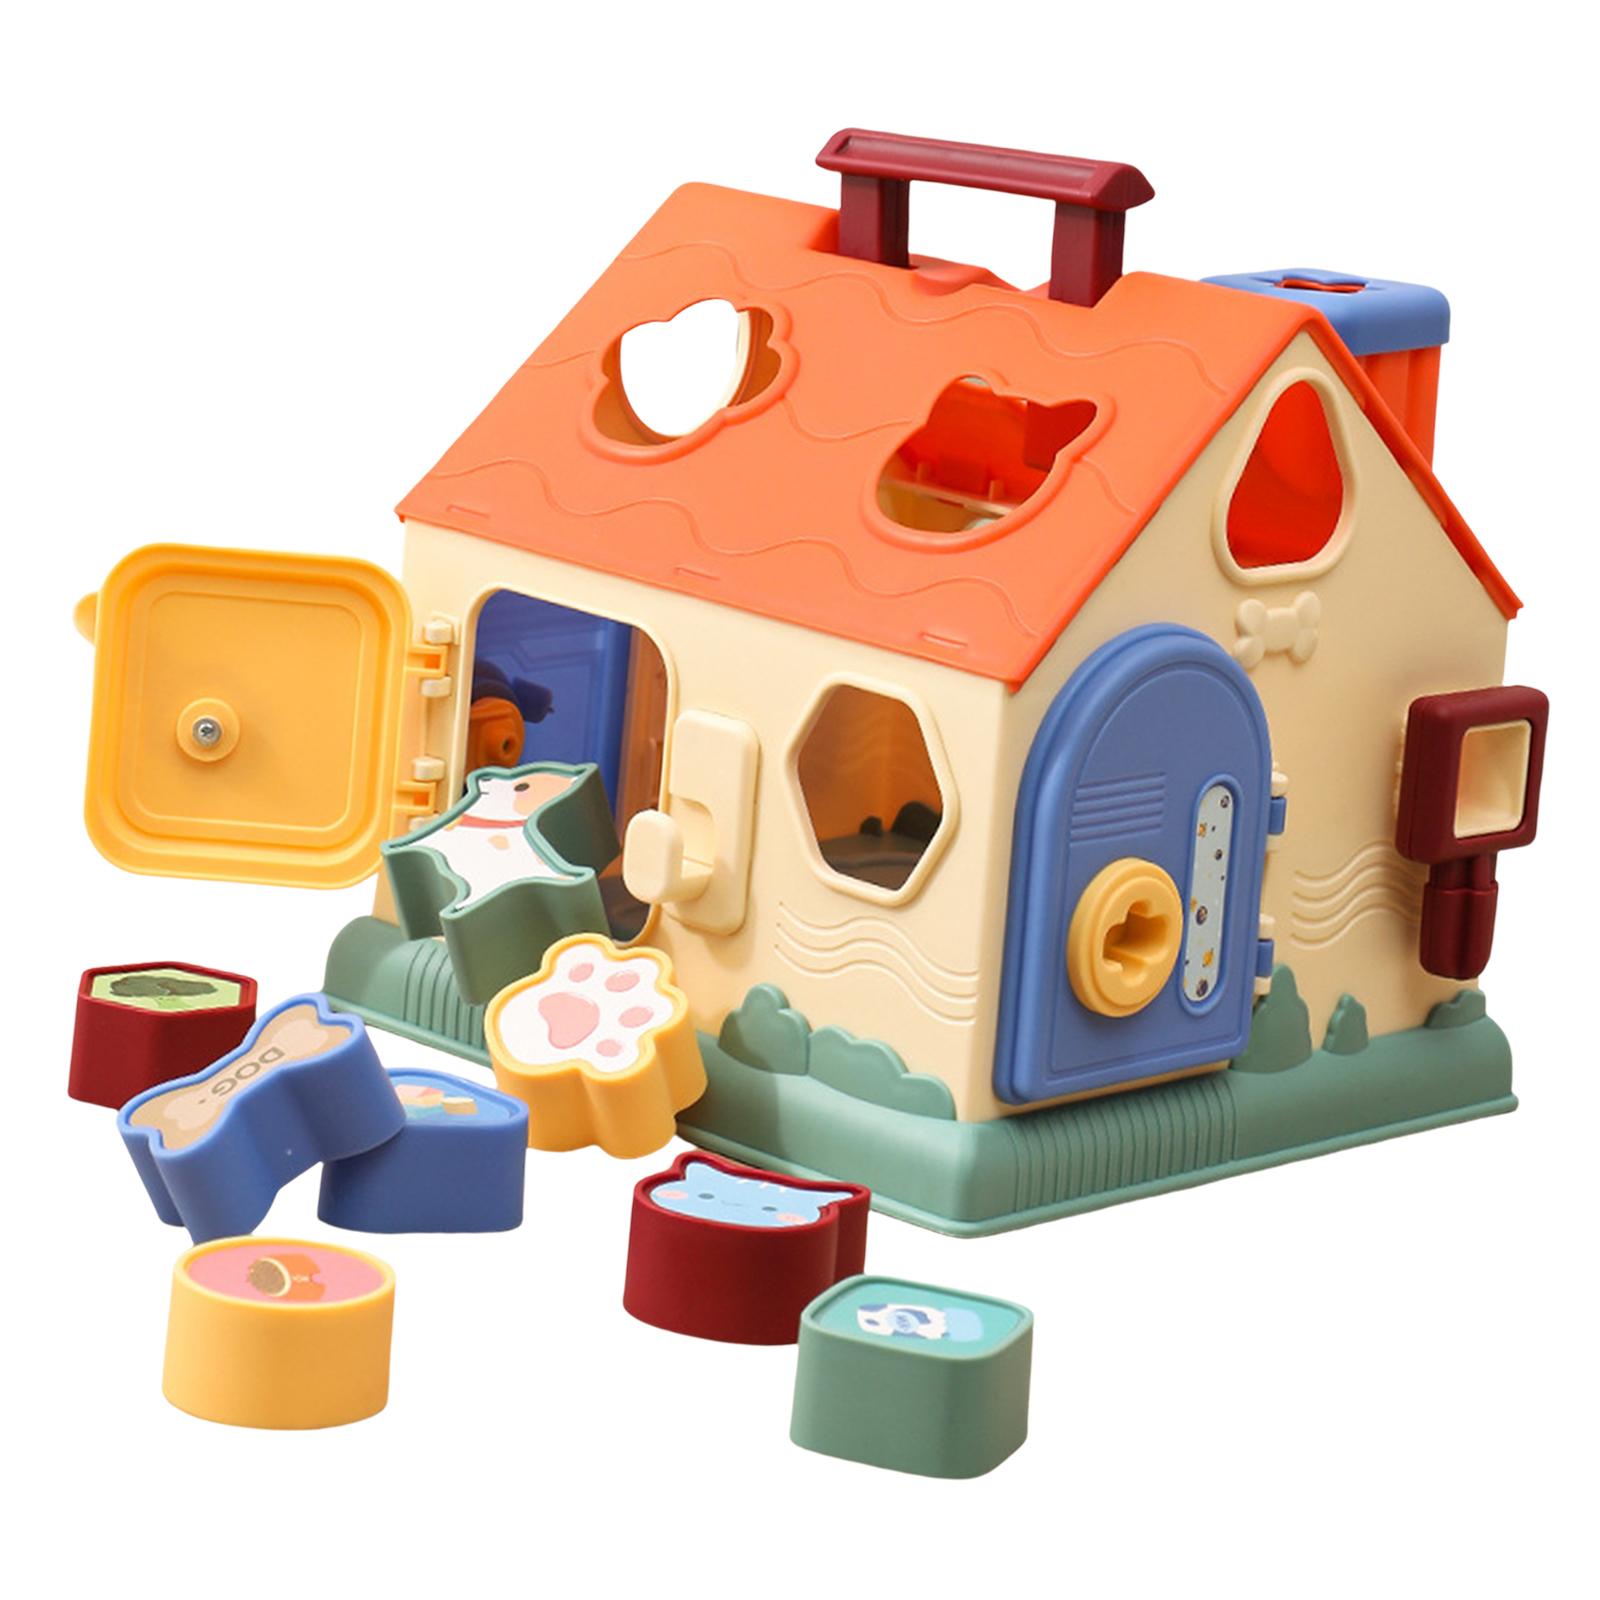 Baoblaze Shape Sorter House Montessori Stack Toy for Kids Holiday Gift